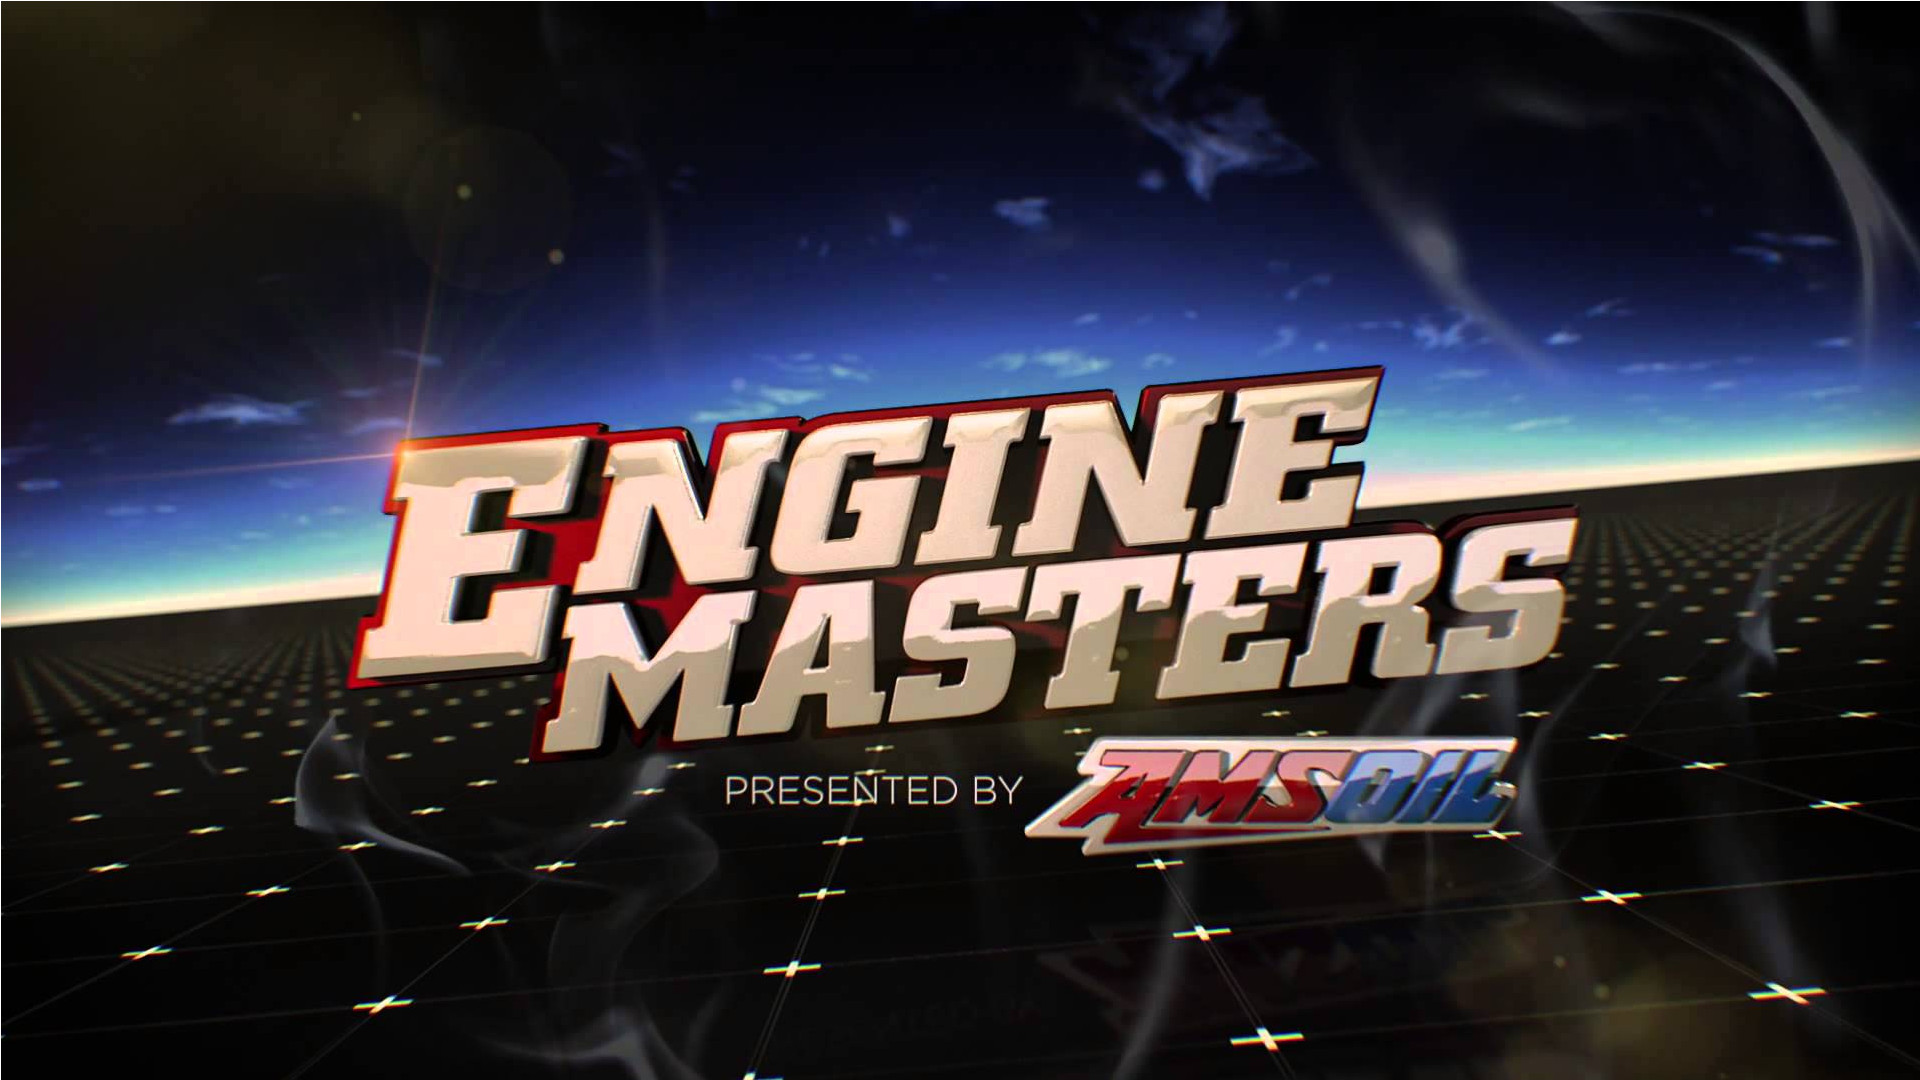 Stream master. Engine Master. Engine Masters work.